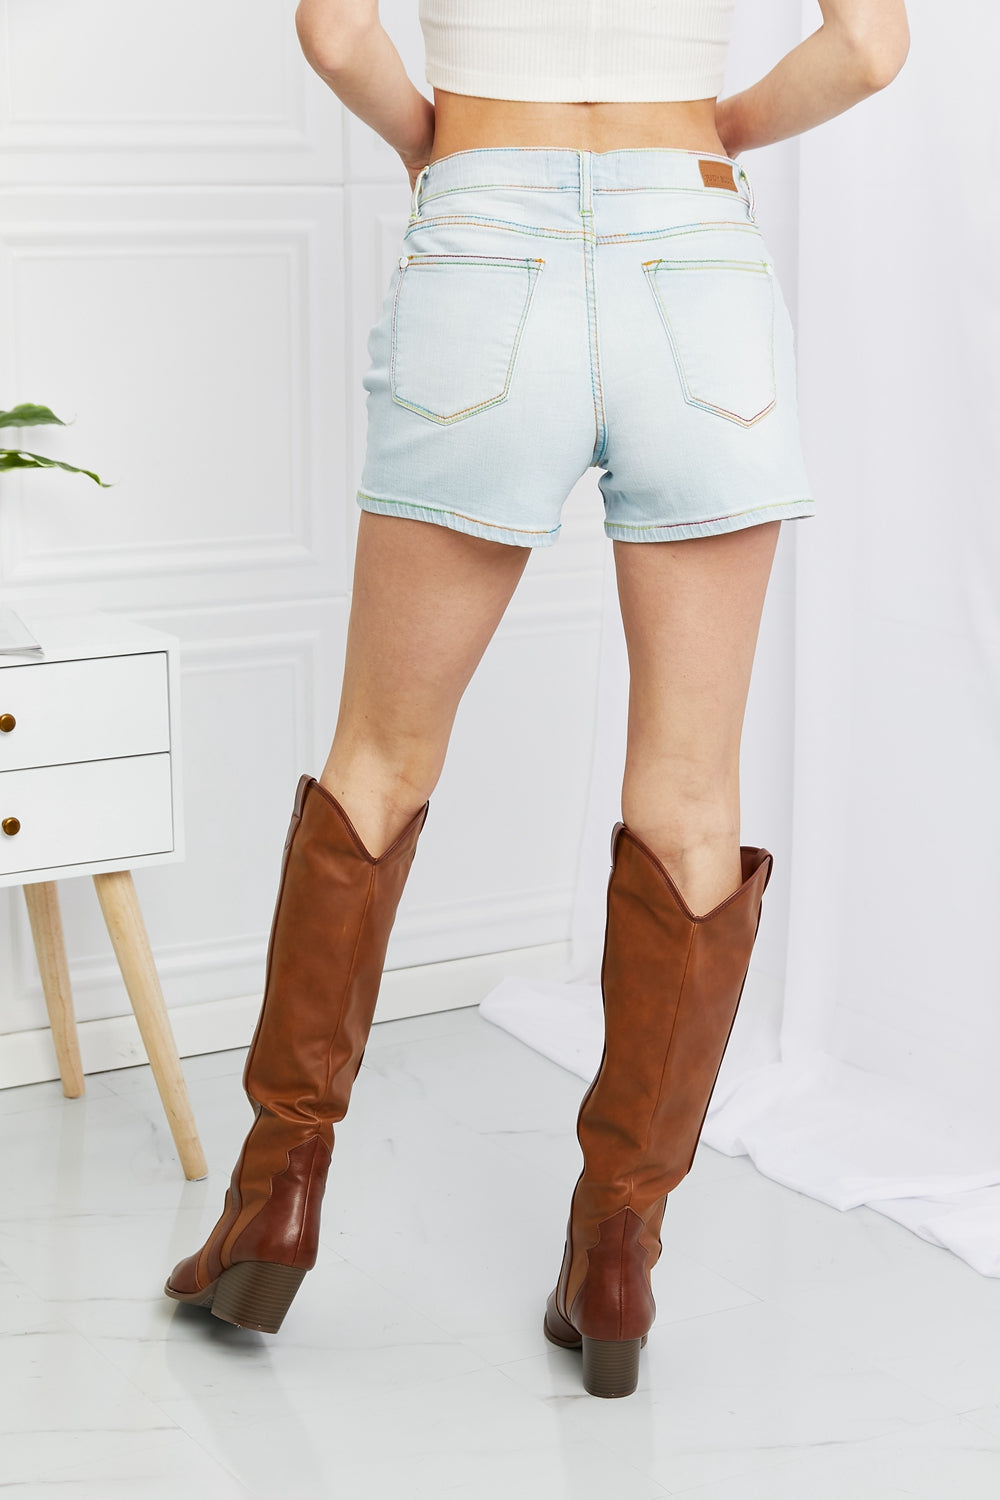 Judy Blue Full Size Contrast Stitching Denim Shorts with Pockets | Shorts - CHANELIA